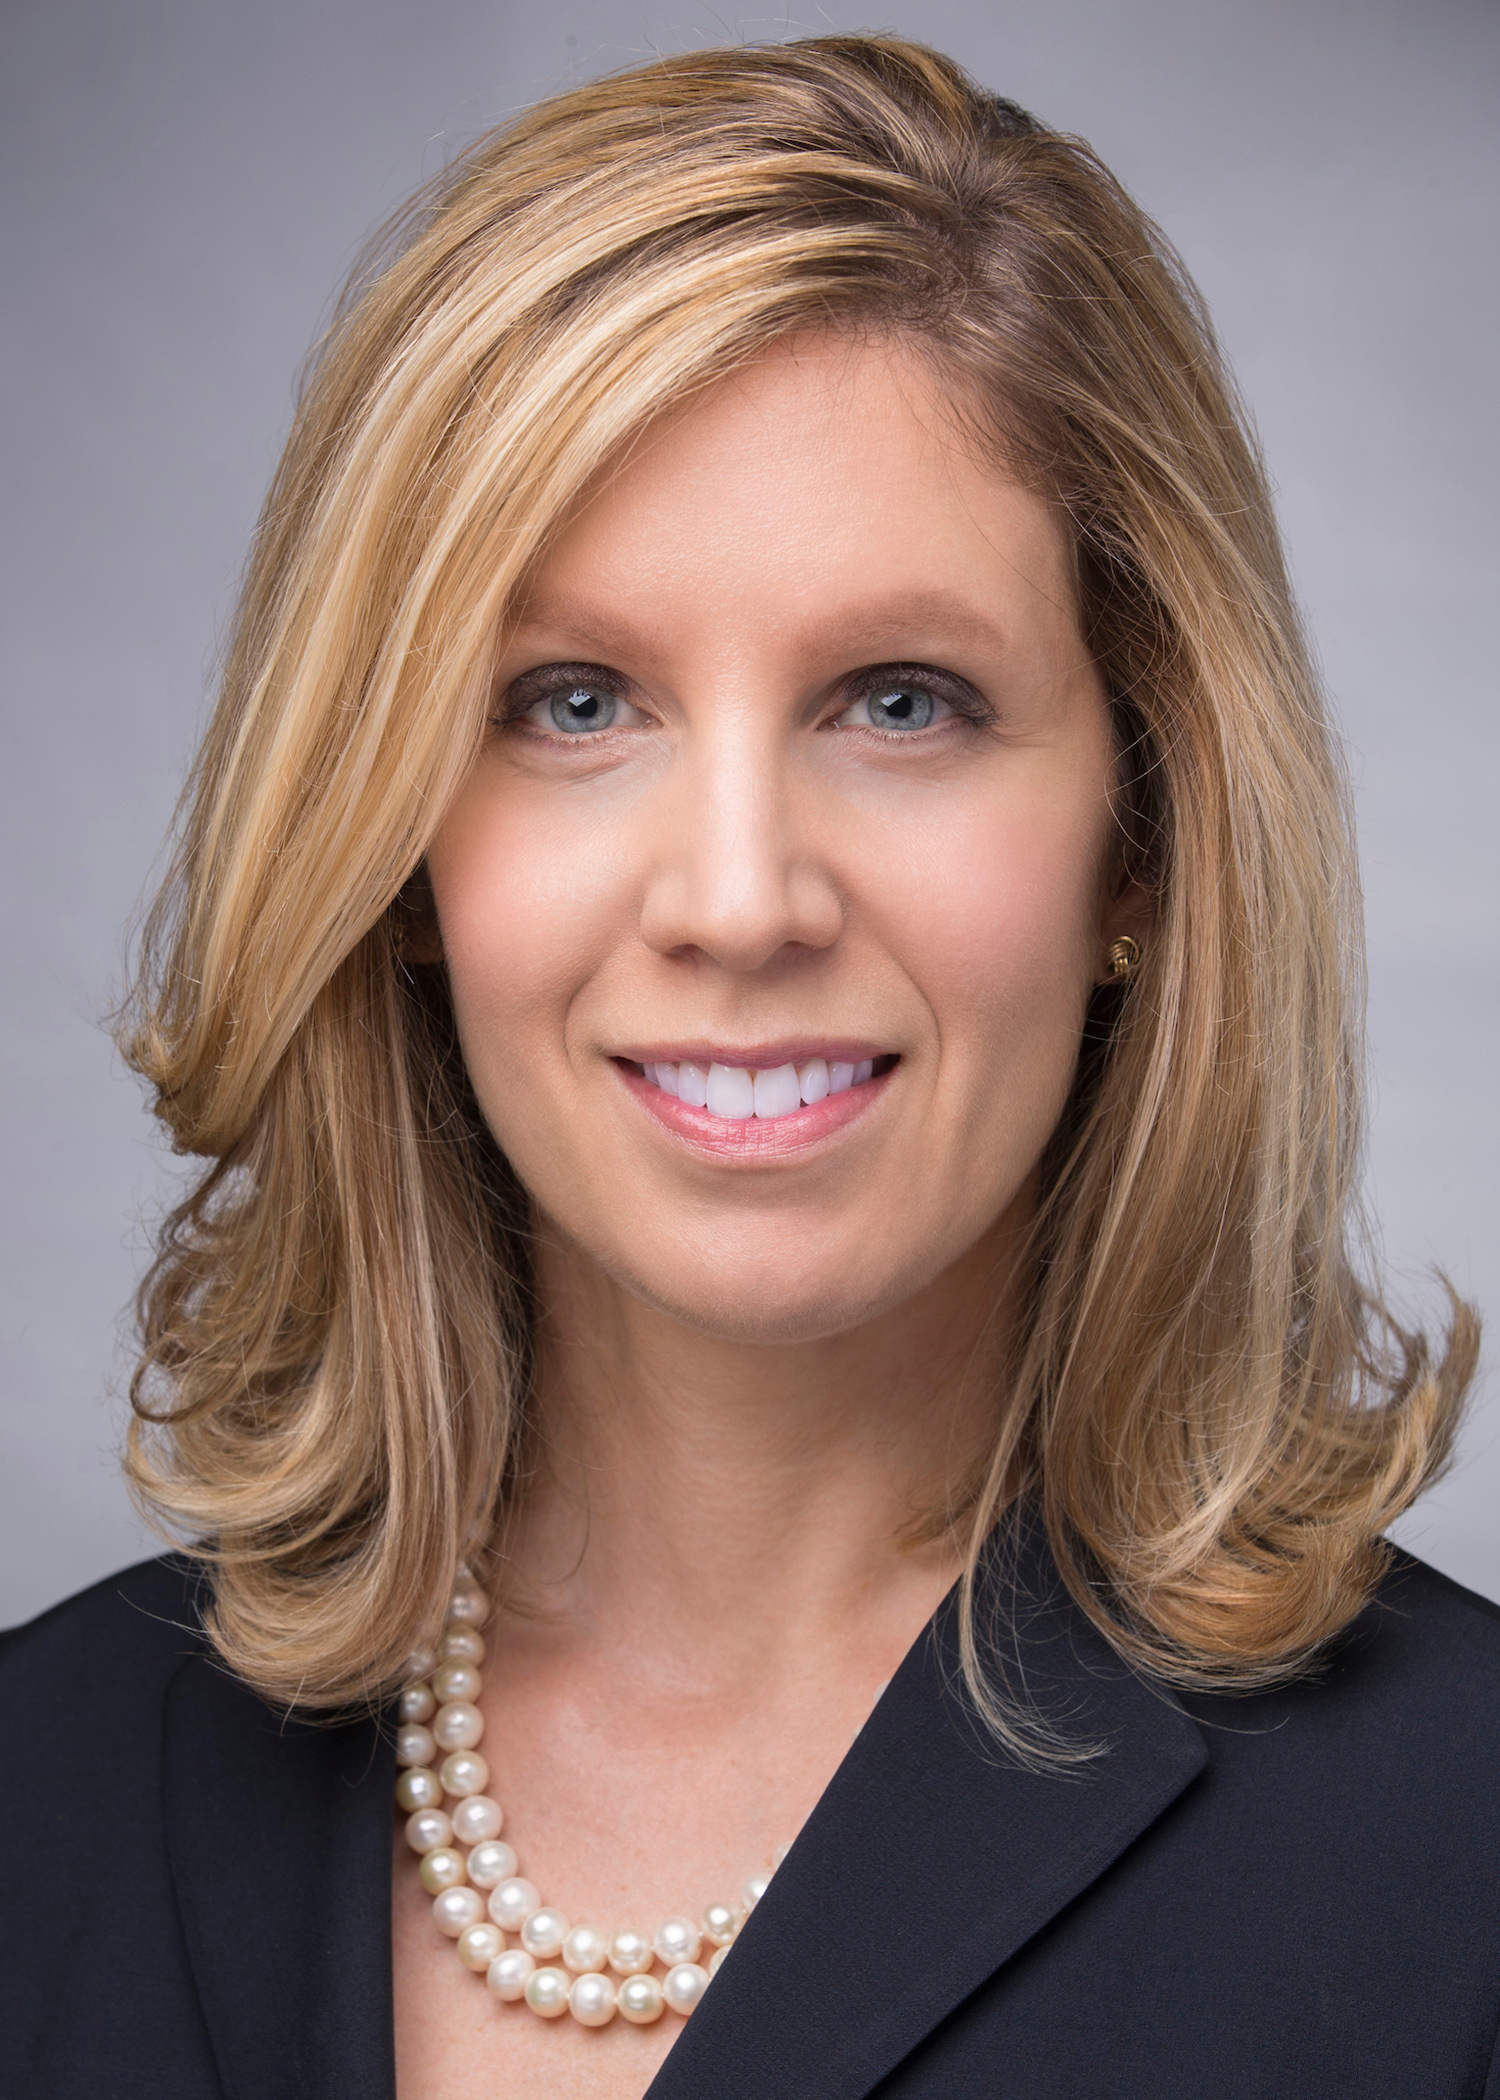 Charlotte Glinski Philips was named Private Banking team leader for Wilmington Trust's Mid-Atlantic market.